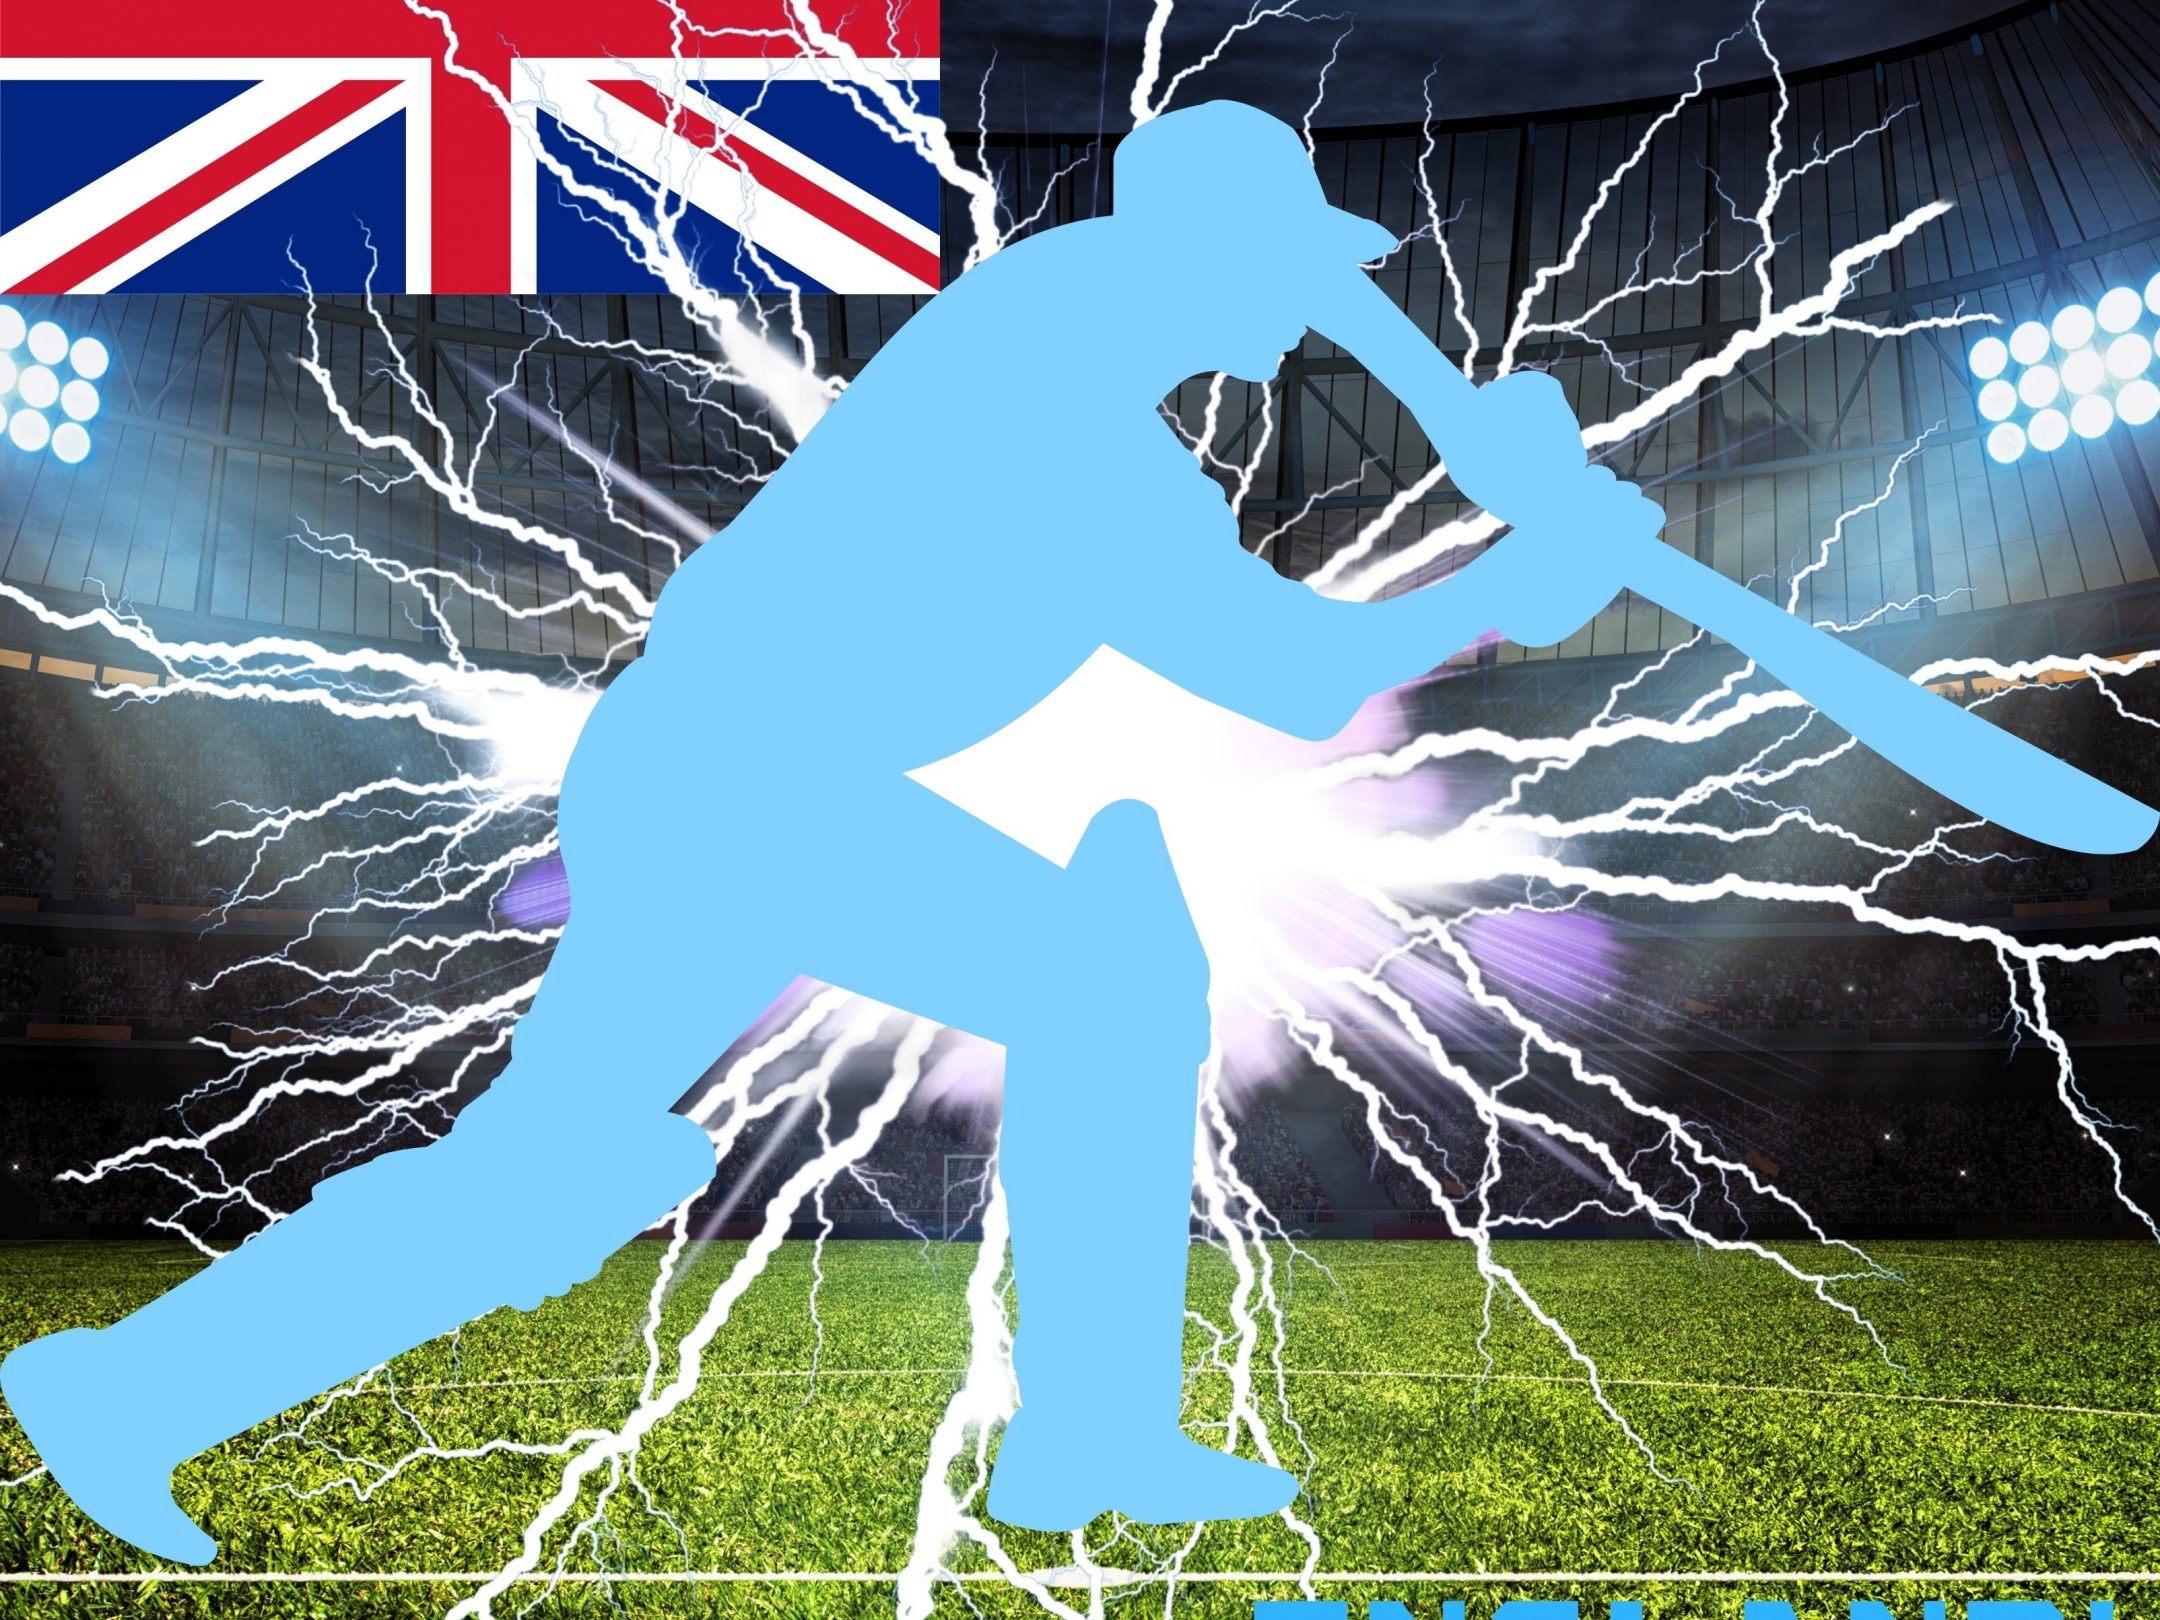 2160x1620 iPad wallpaper 4k England Cricket Stadium iPad Wallpaper 2160x1620 pixels resolution